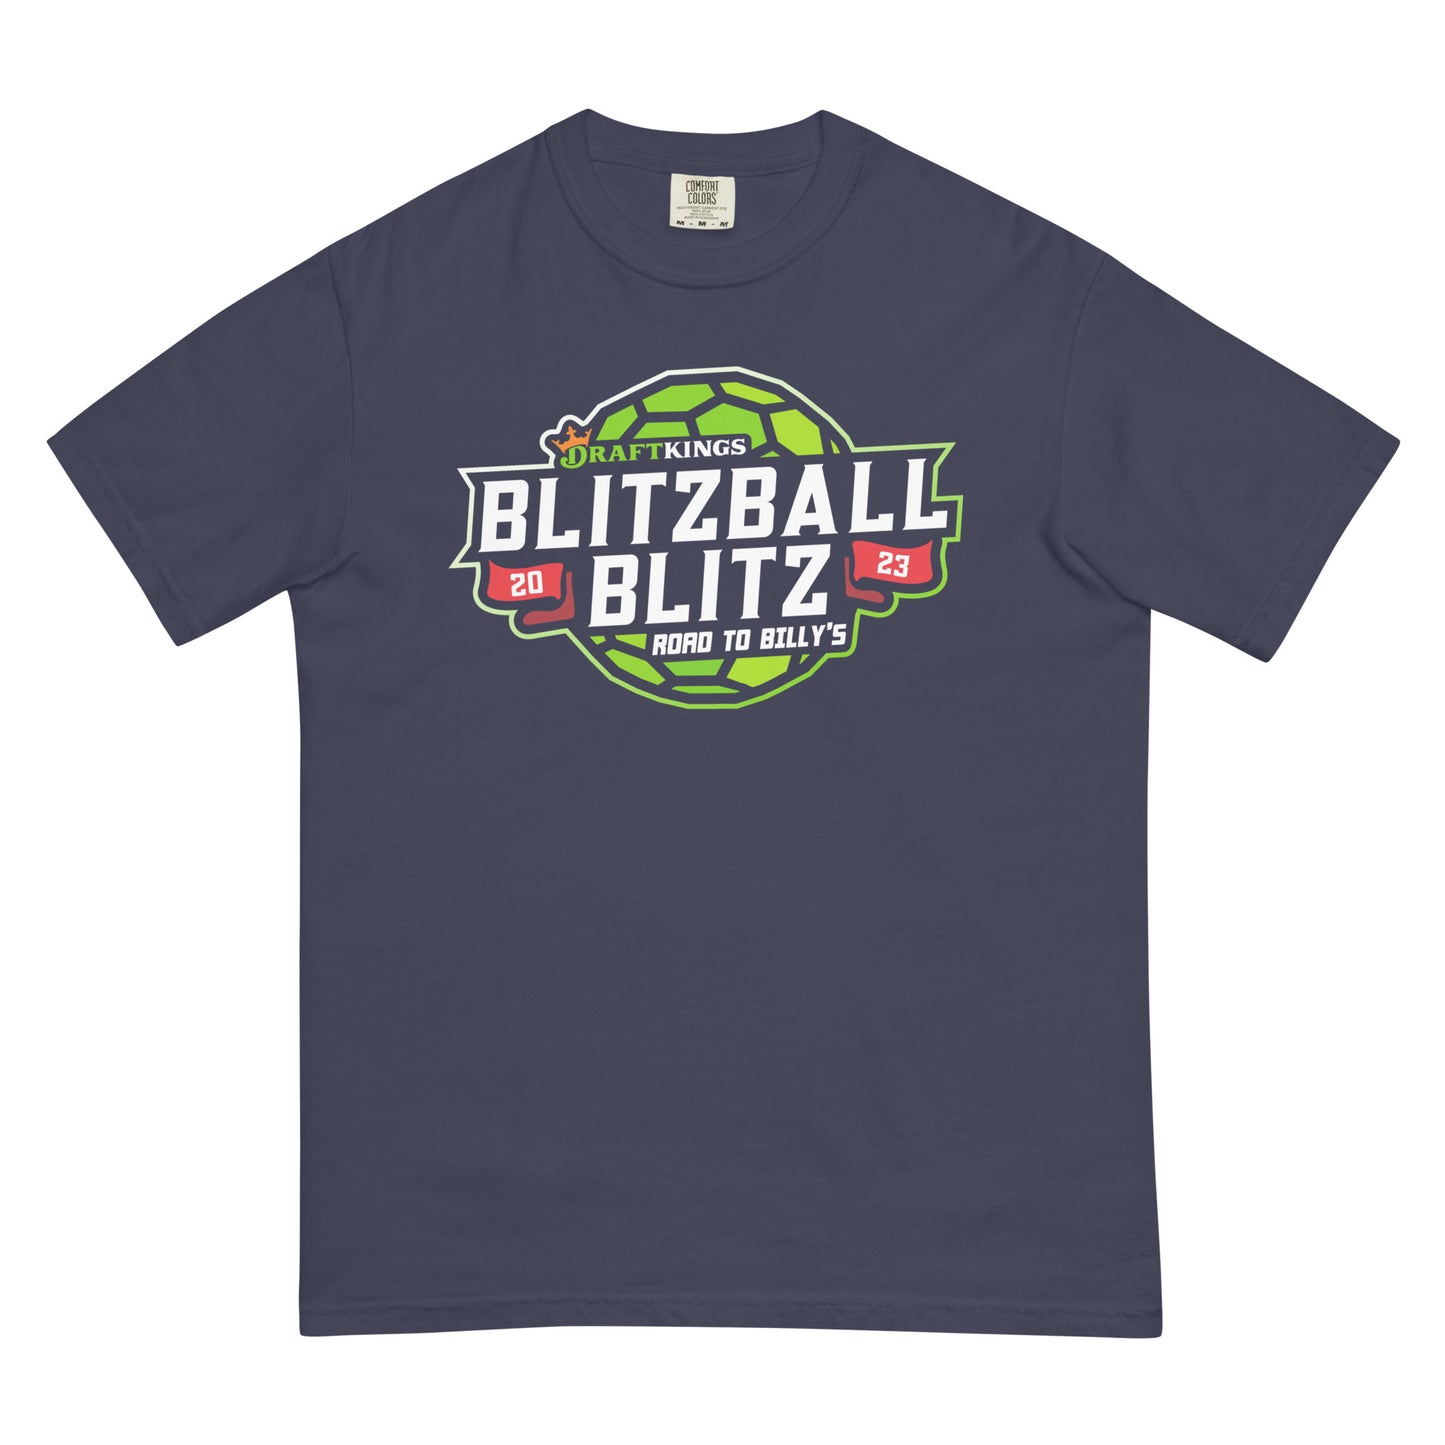 Blitzball Blitz | Comfort Colors® Vintage Tee